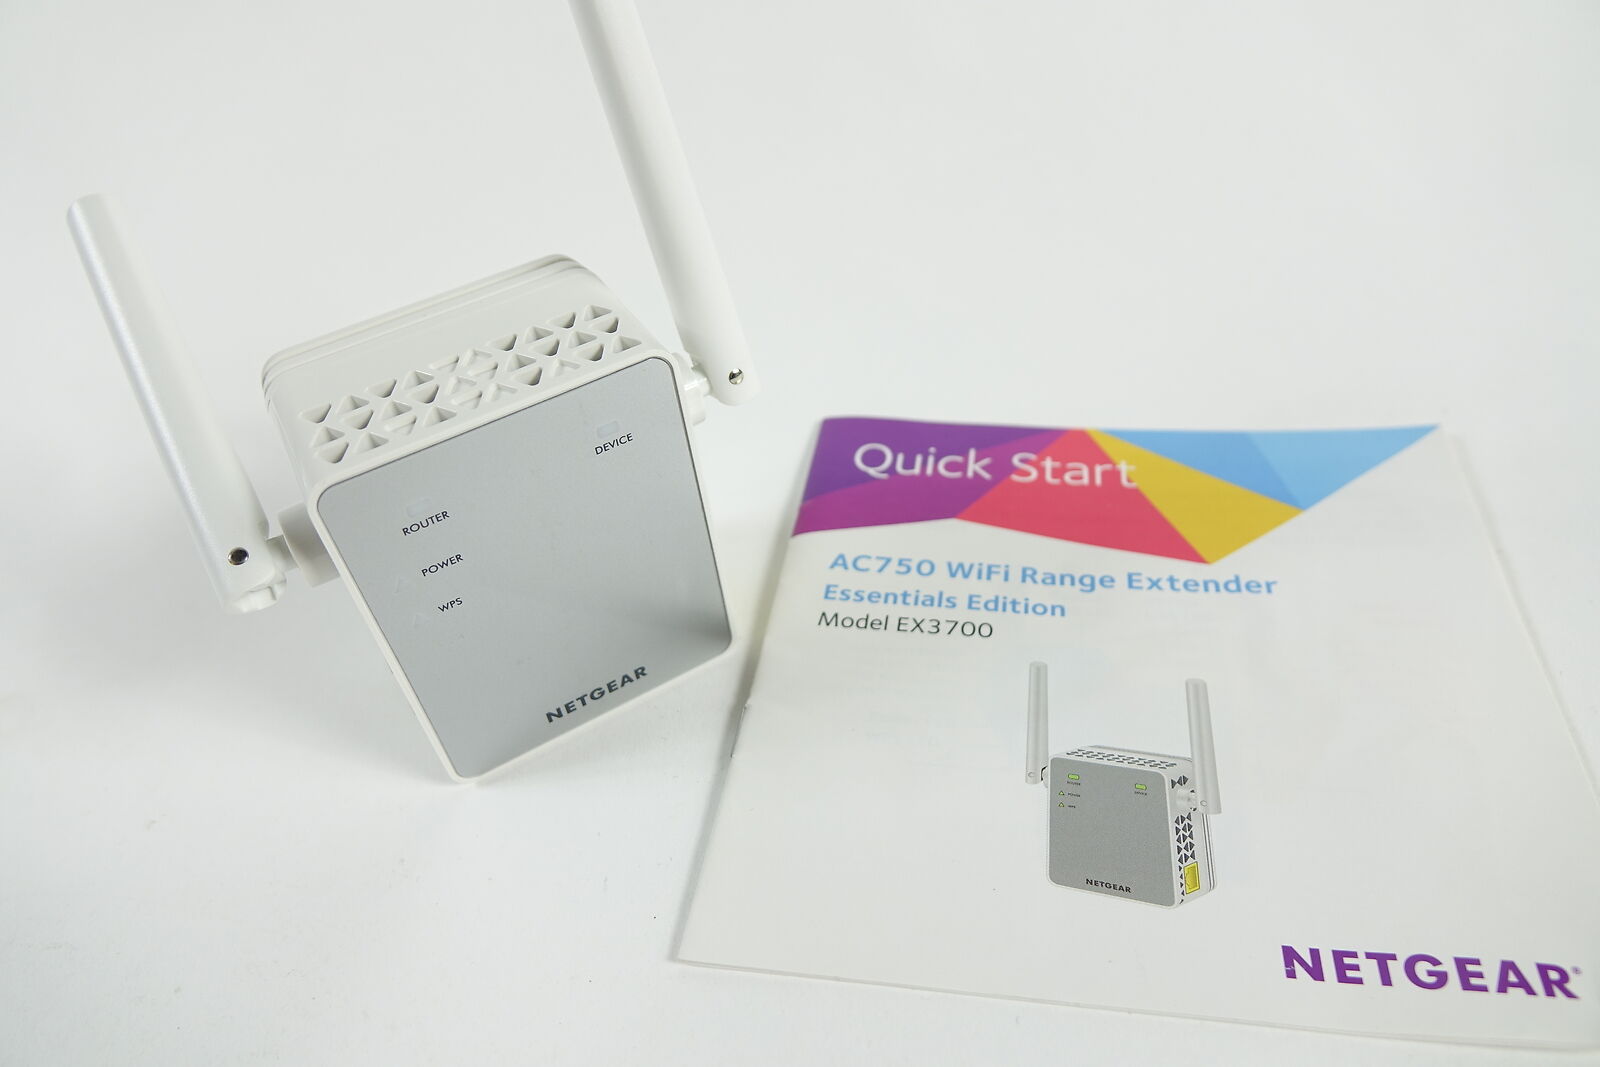 Netgear AC750 WiFi Range Extender Essentials Edition Model EX3700